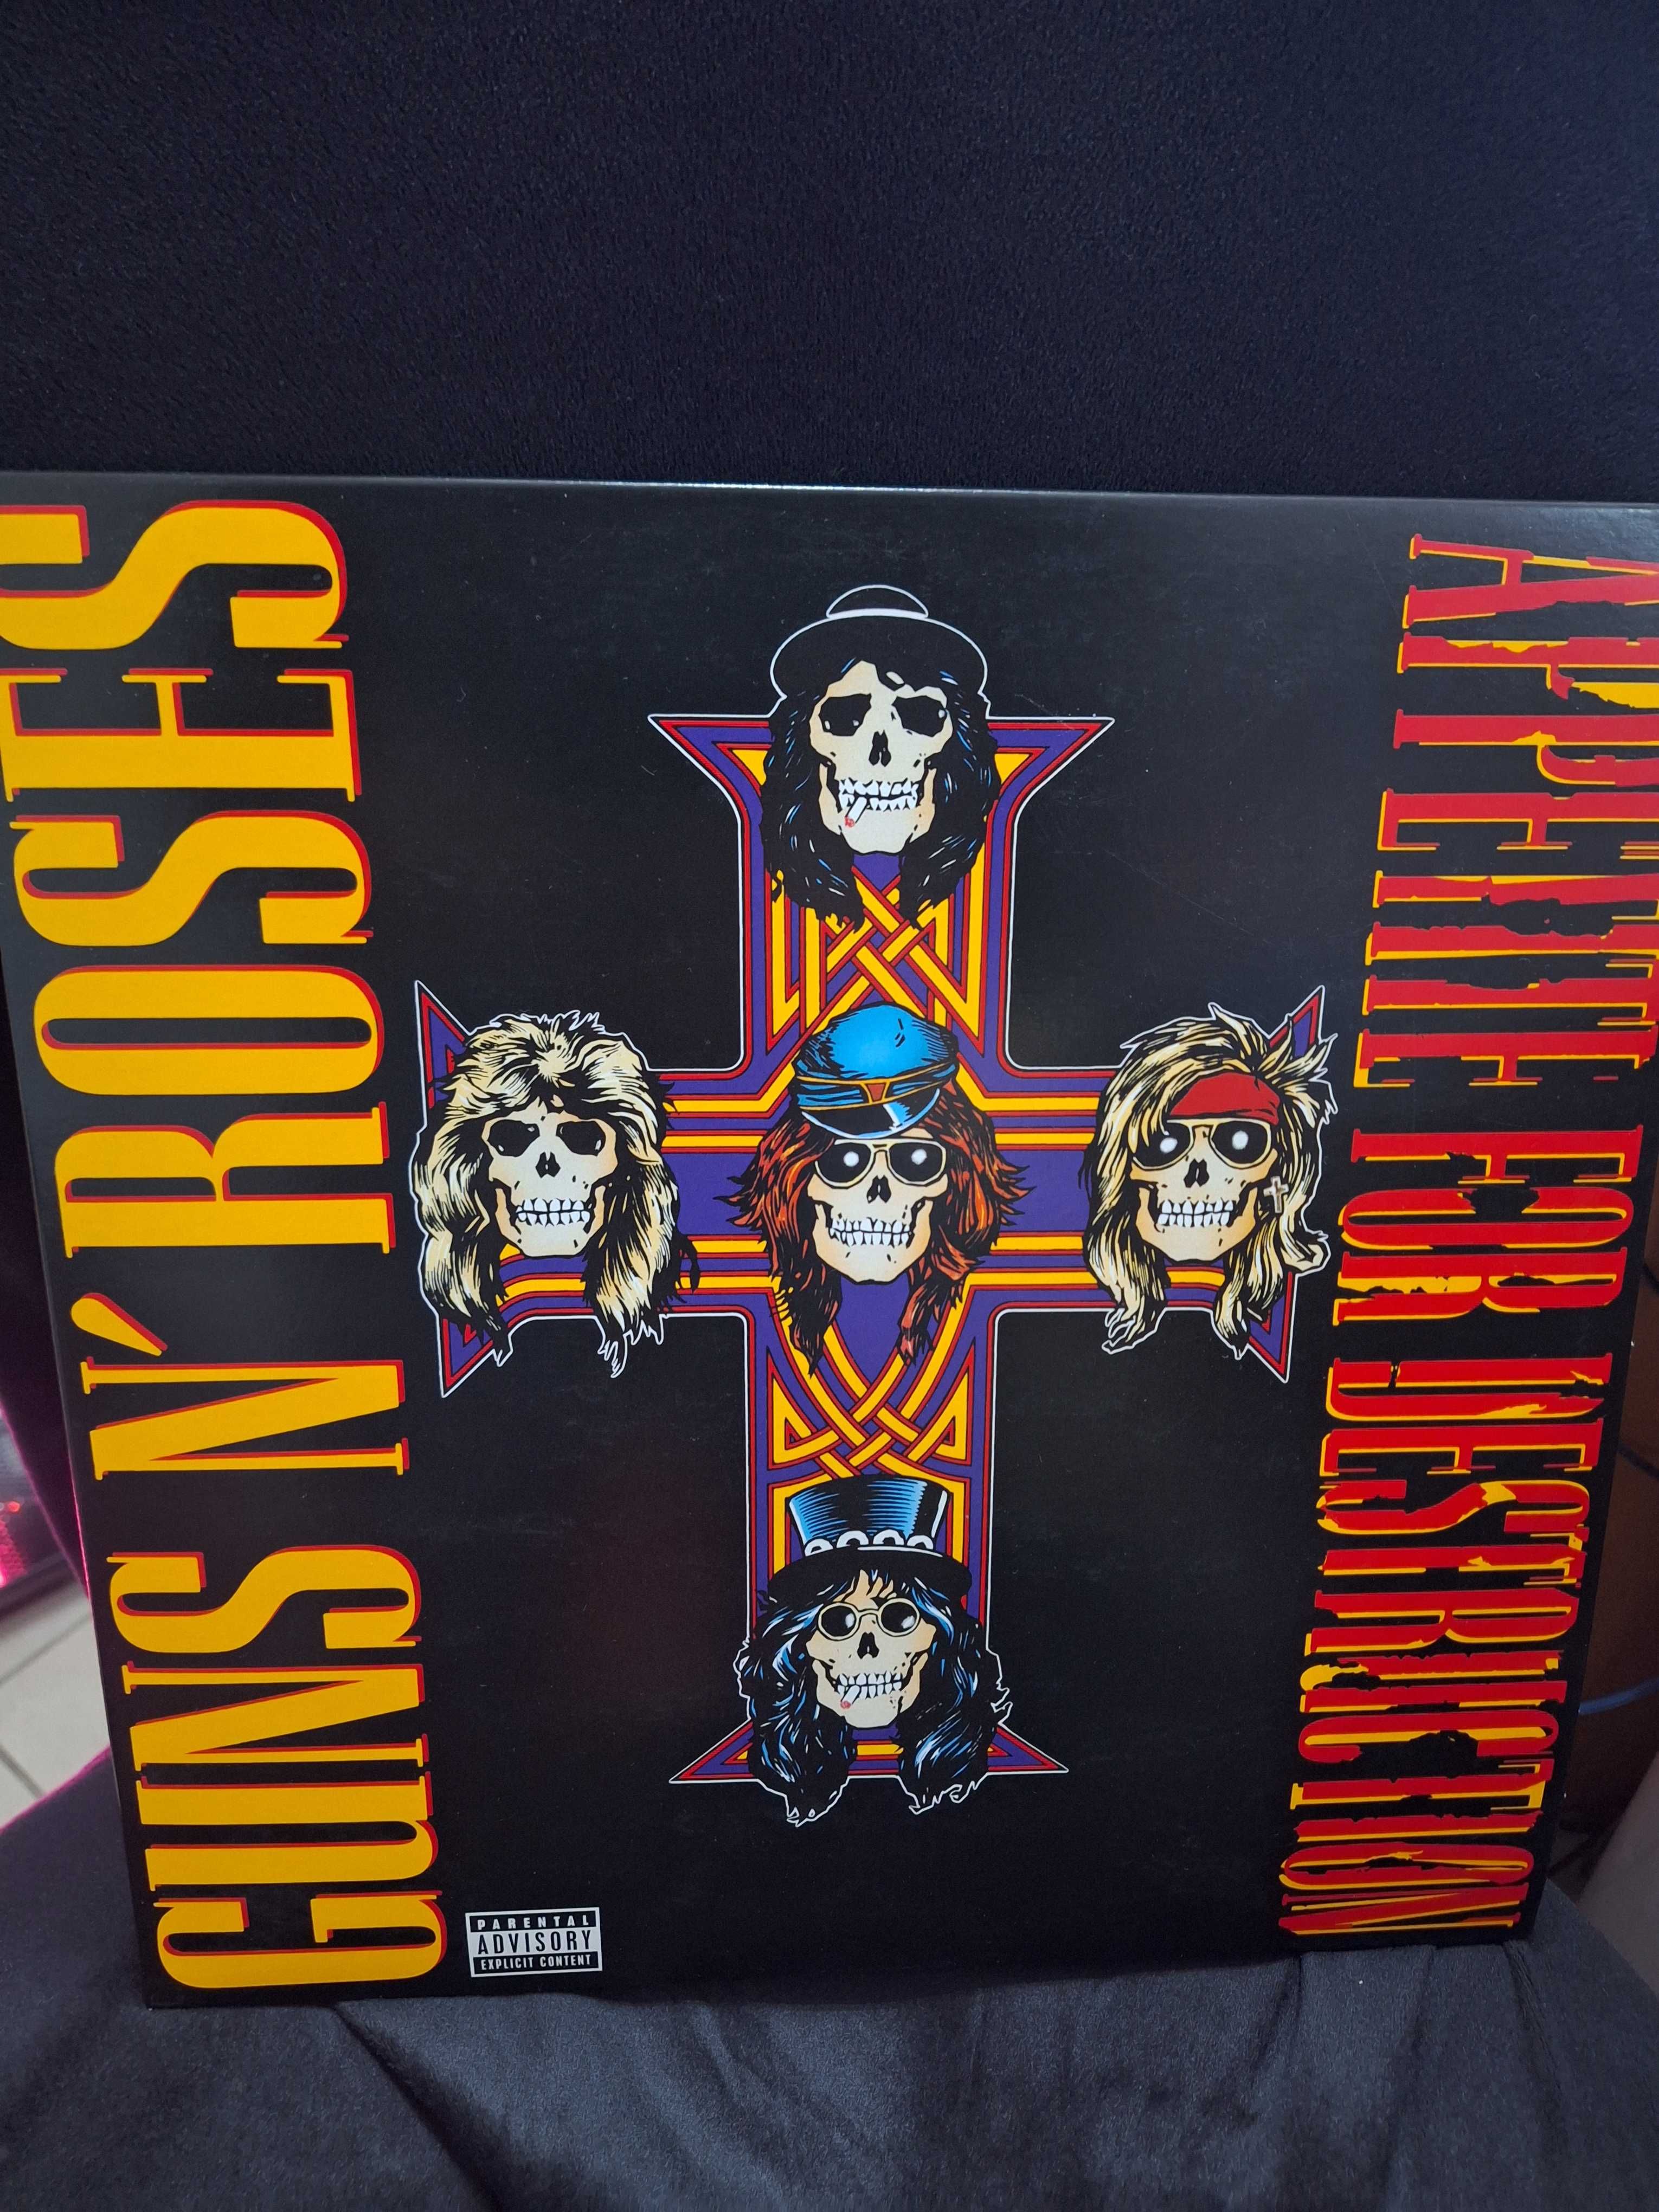 ZADBANA płyta winylowa Guns N' Roses Appetite for Destruction